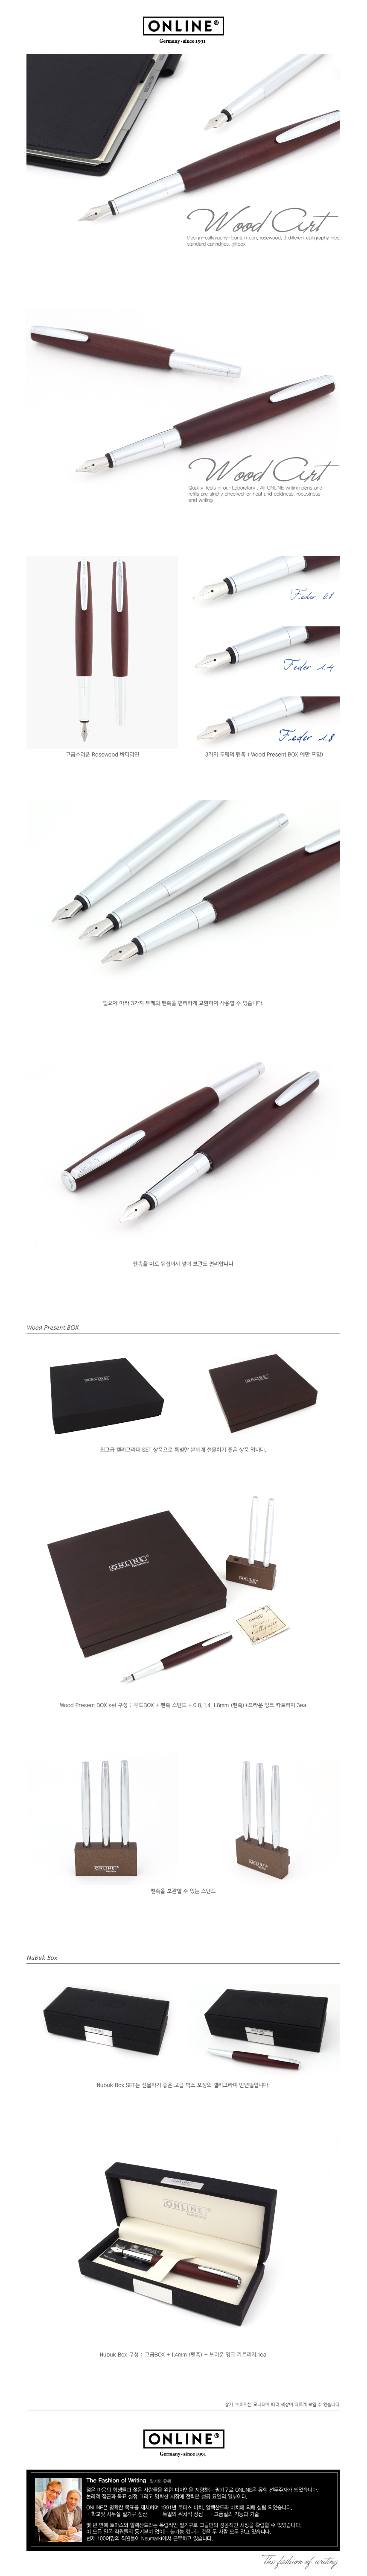 online_mini-wood-pen.jpg